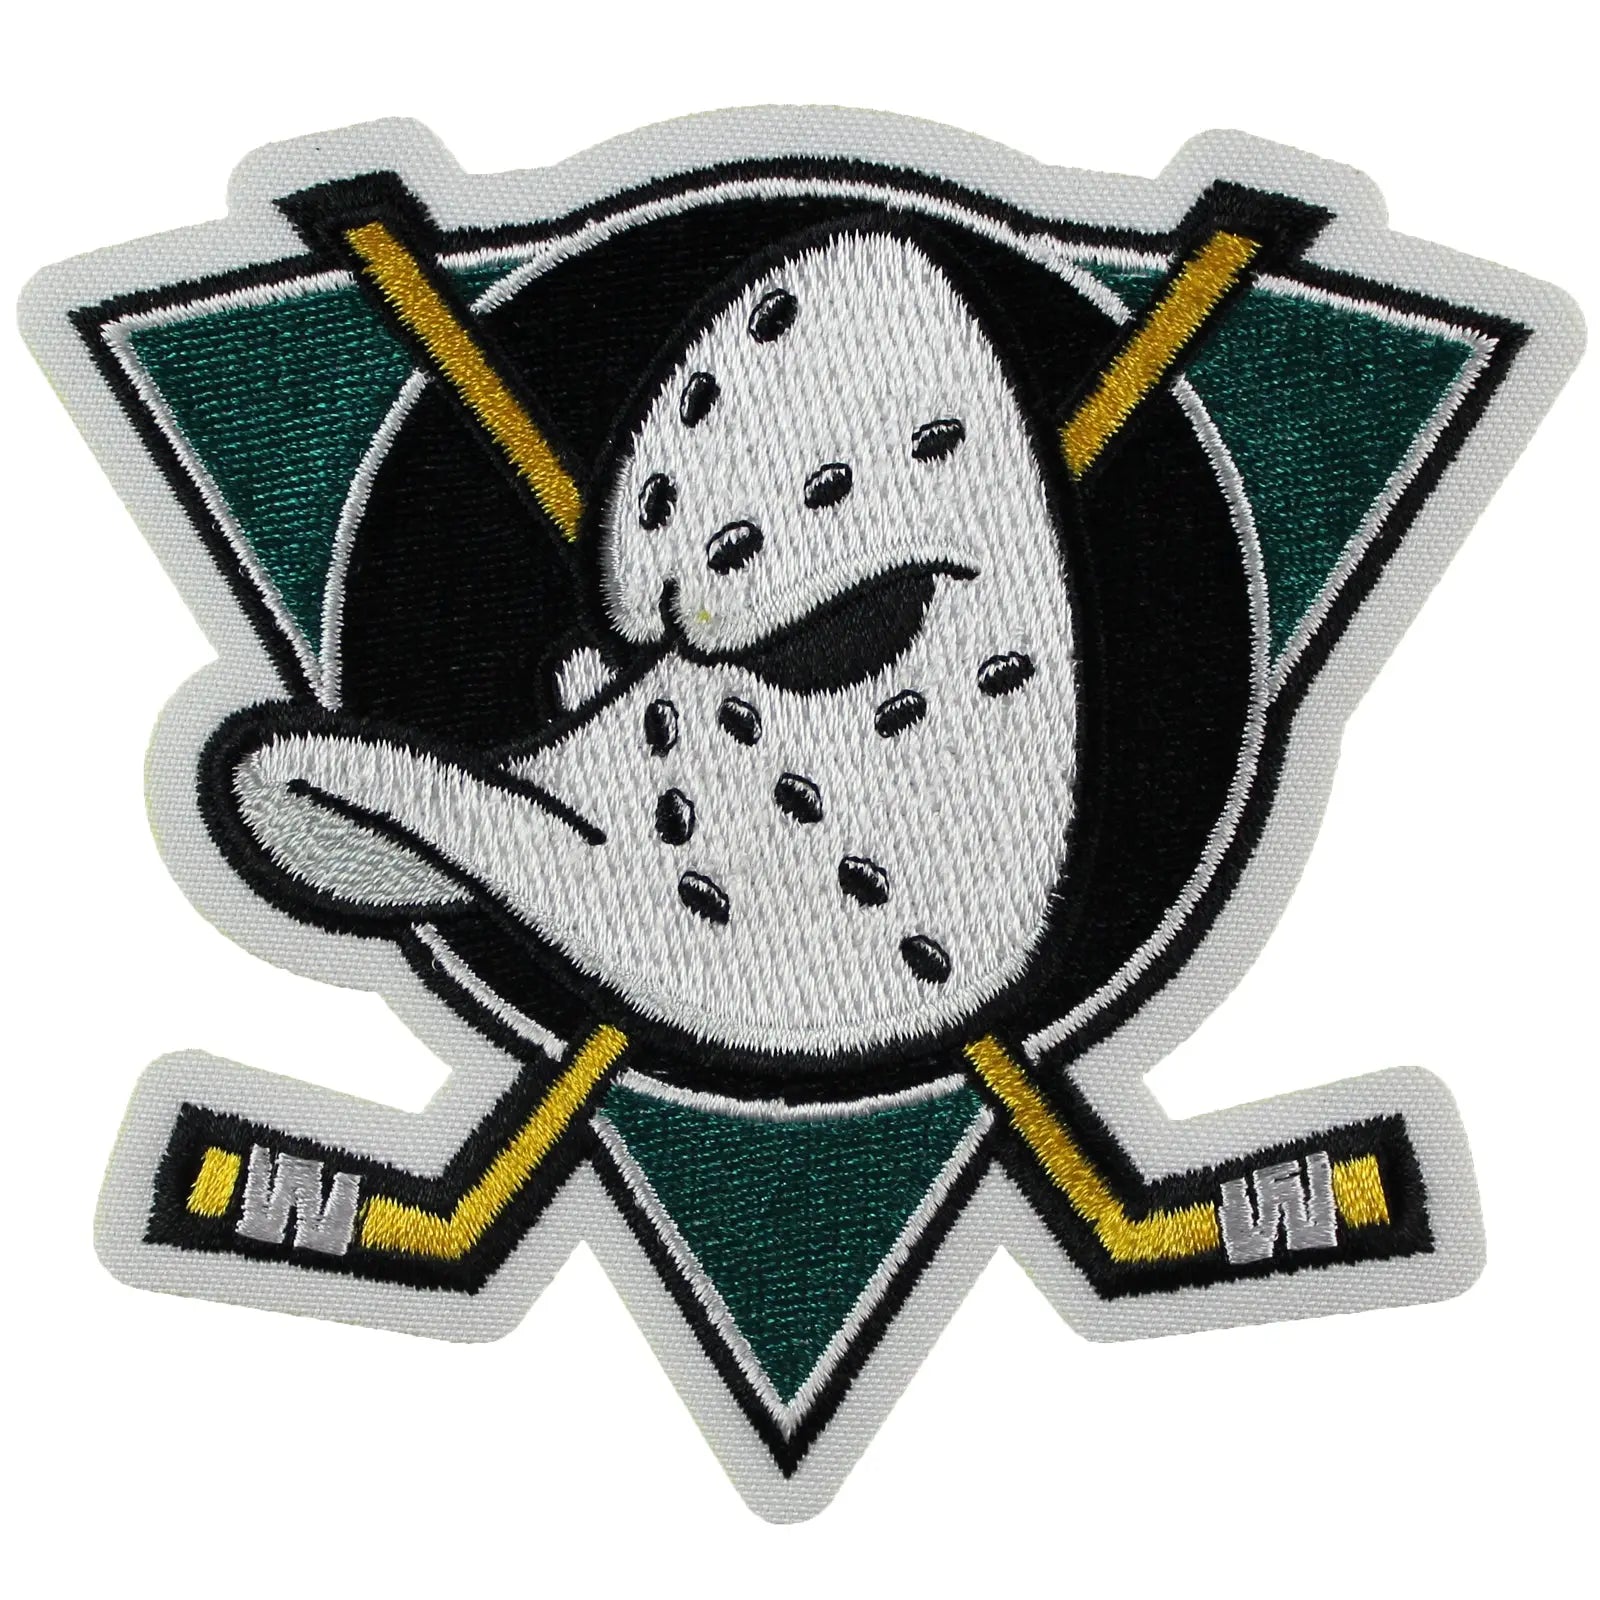 Anaheim Mighty Ducks NHL Jerseys - Vintage Hockey Custom Throwback